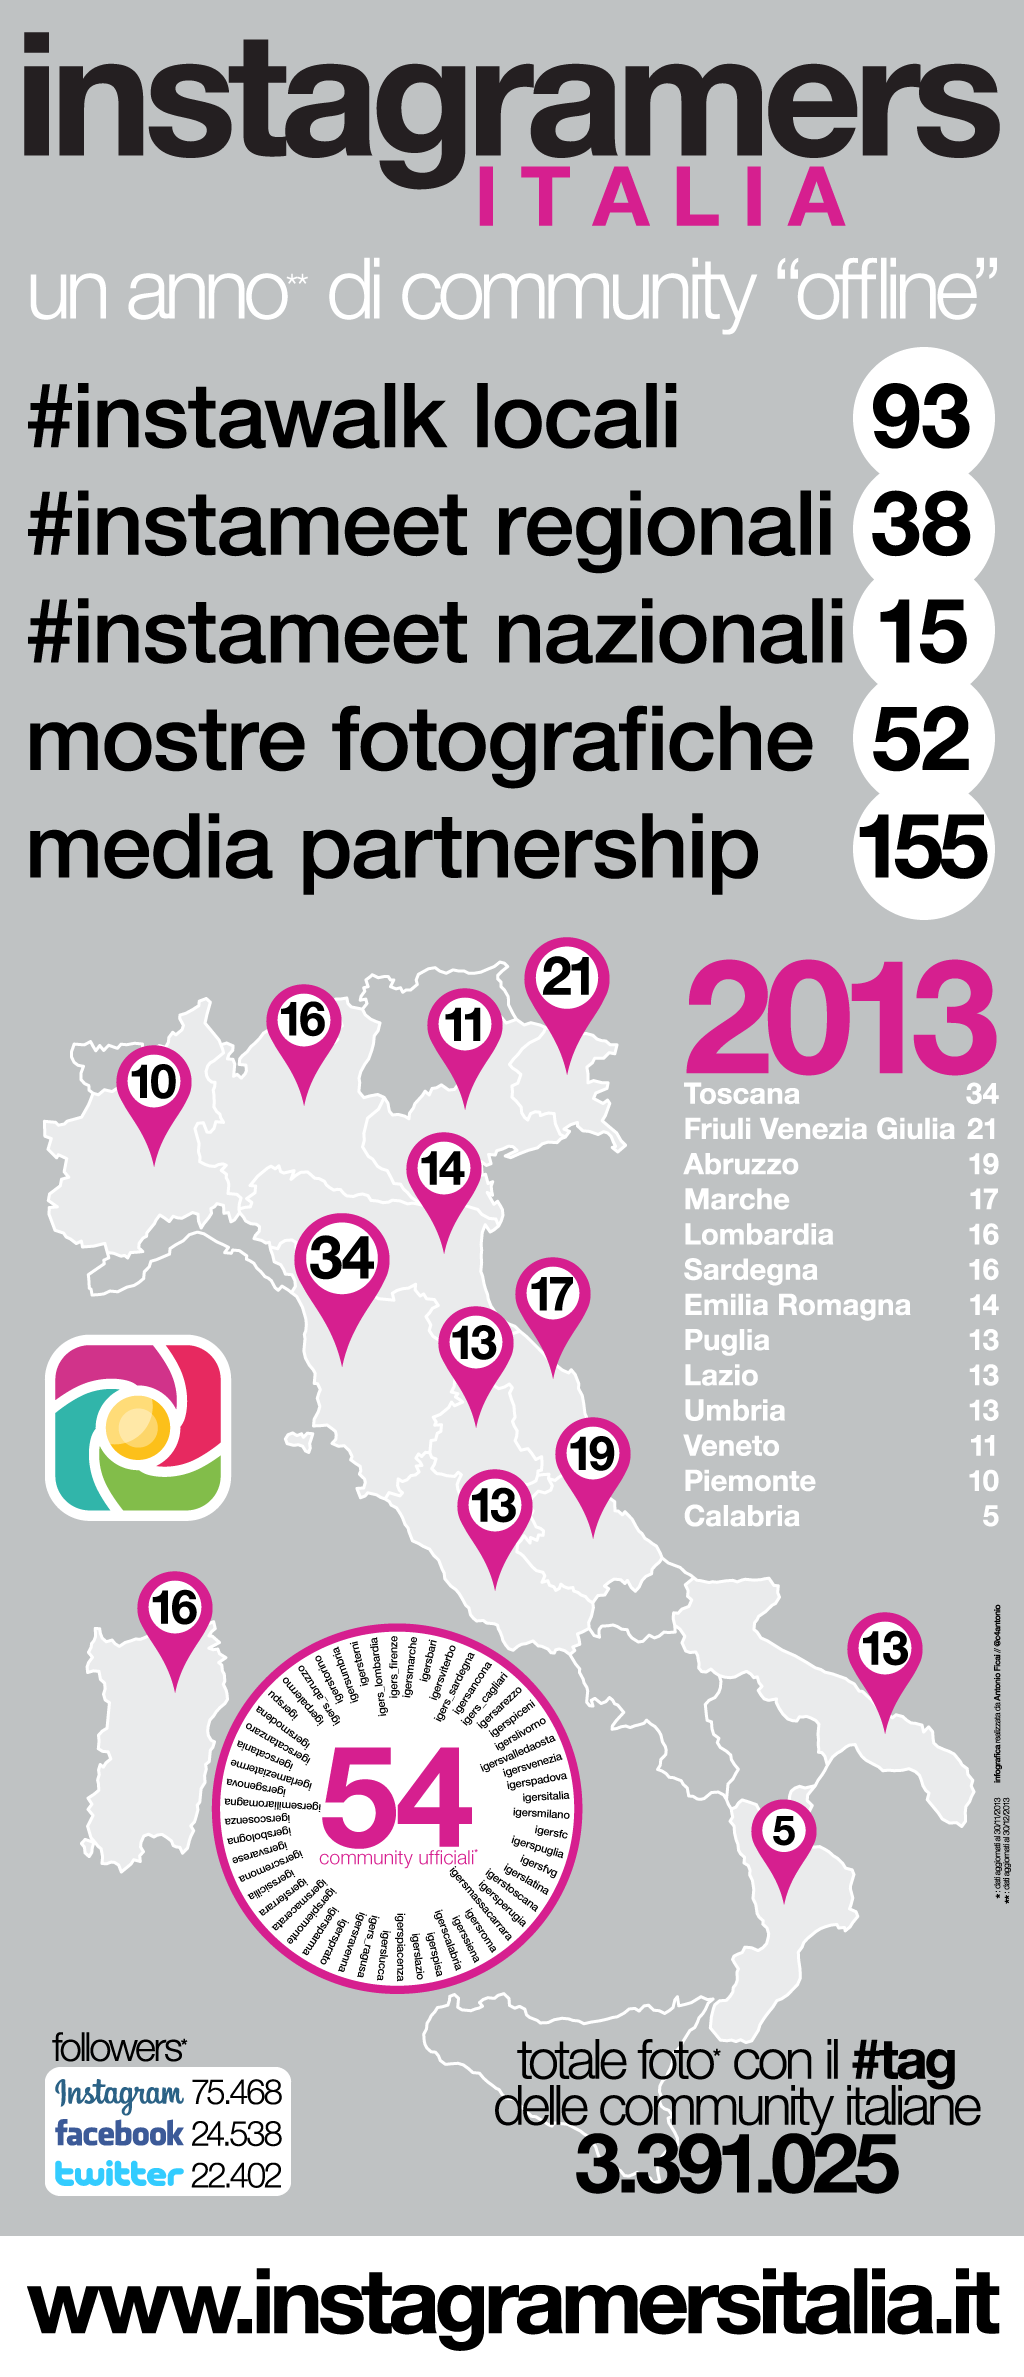 instagramers italia 2013 infographic